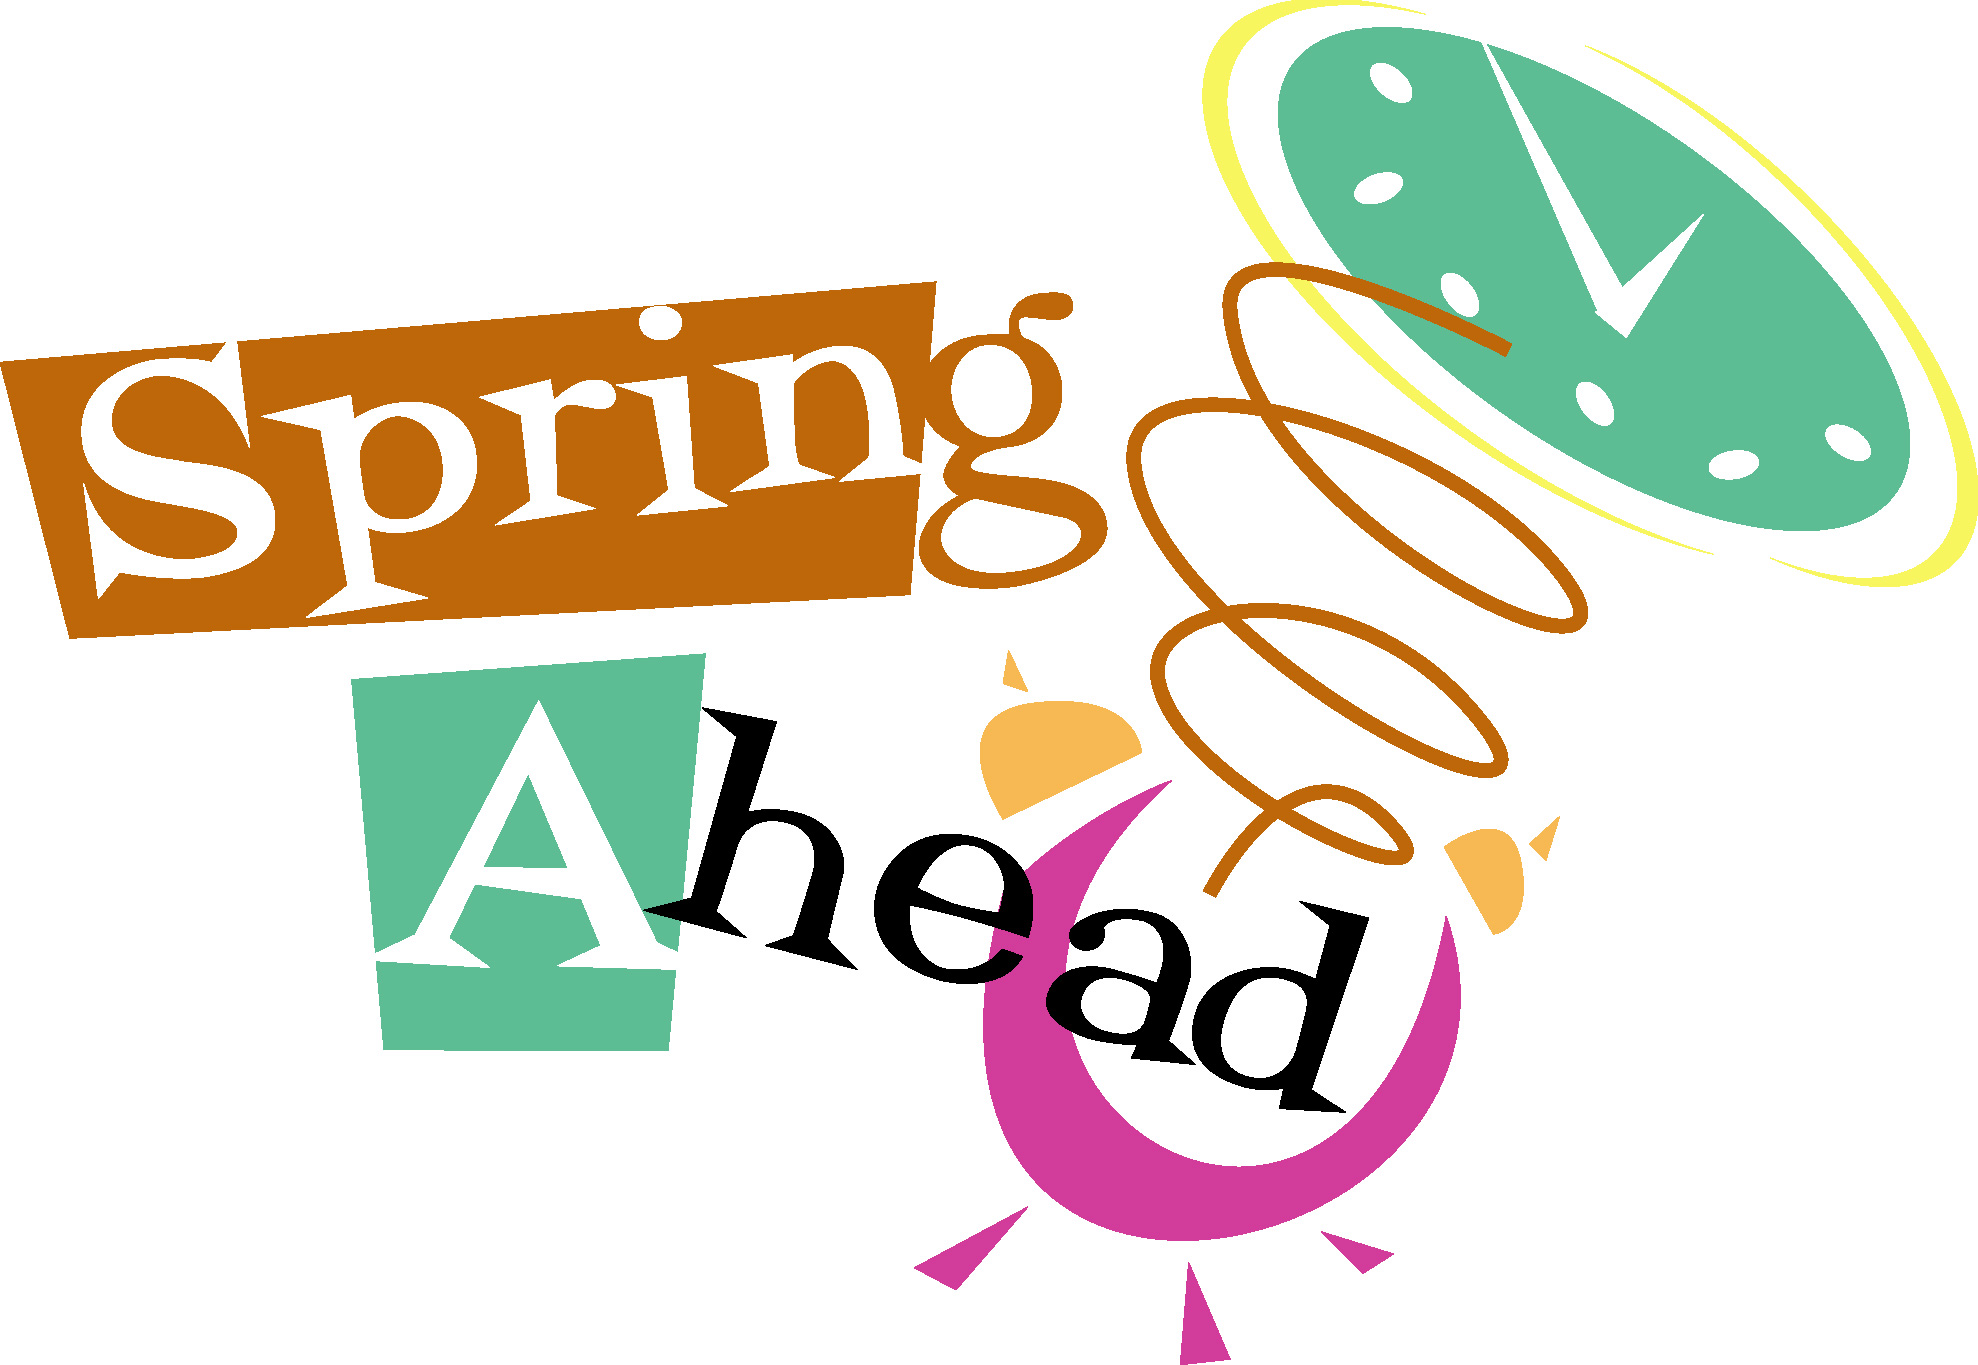 Spring Ahead with Daylight Savings